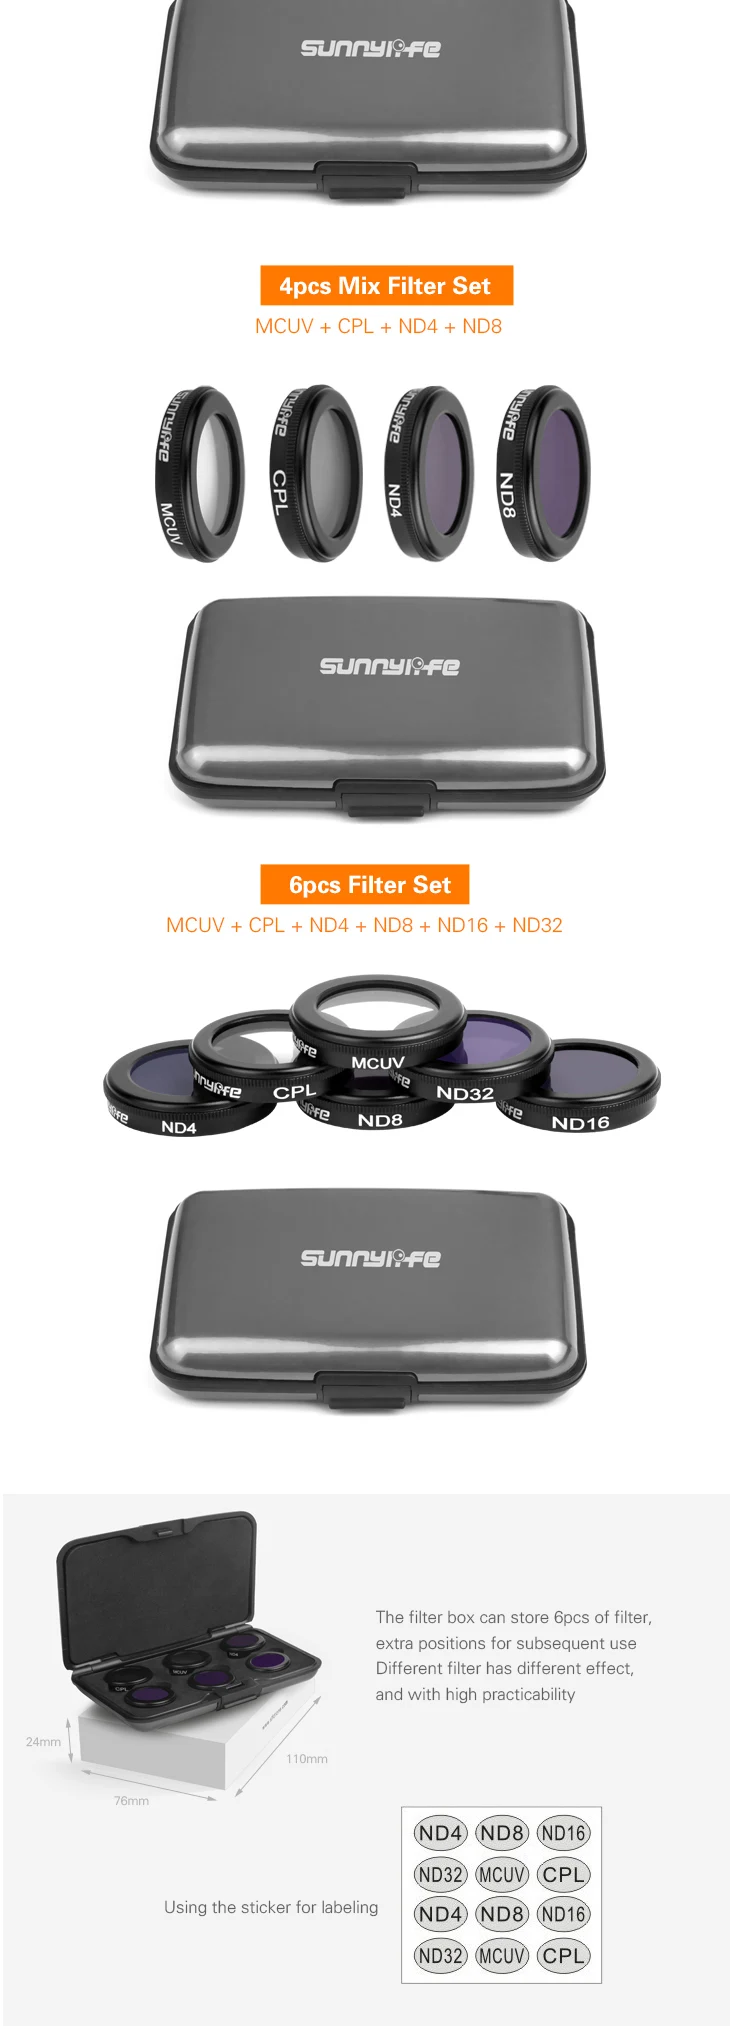 Набор фильтров для зум-объектива Sunnylife Mavic 2 MCUV CPL ND4 ND8 ND16 ND32 аксессуары для фильтров для DJI Mavic 2 Zoom Drone